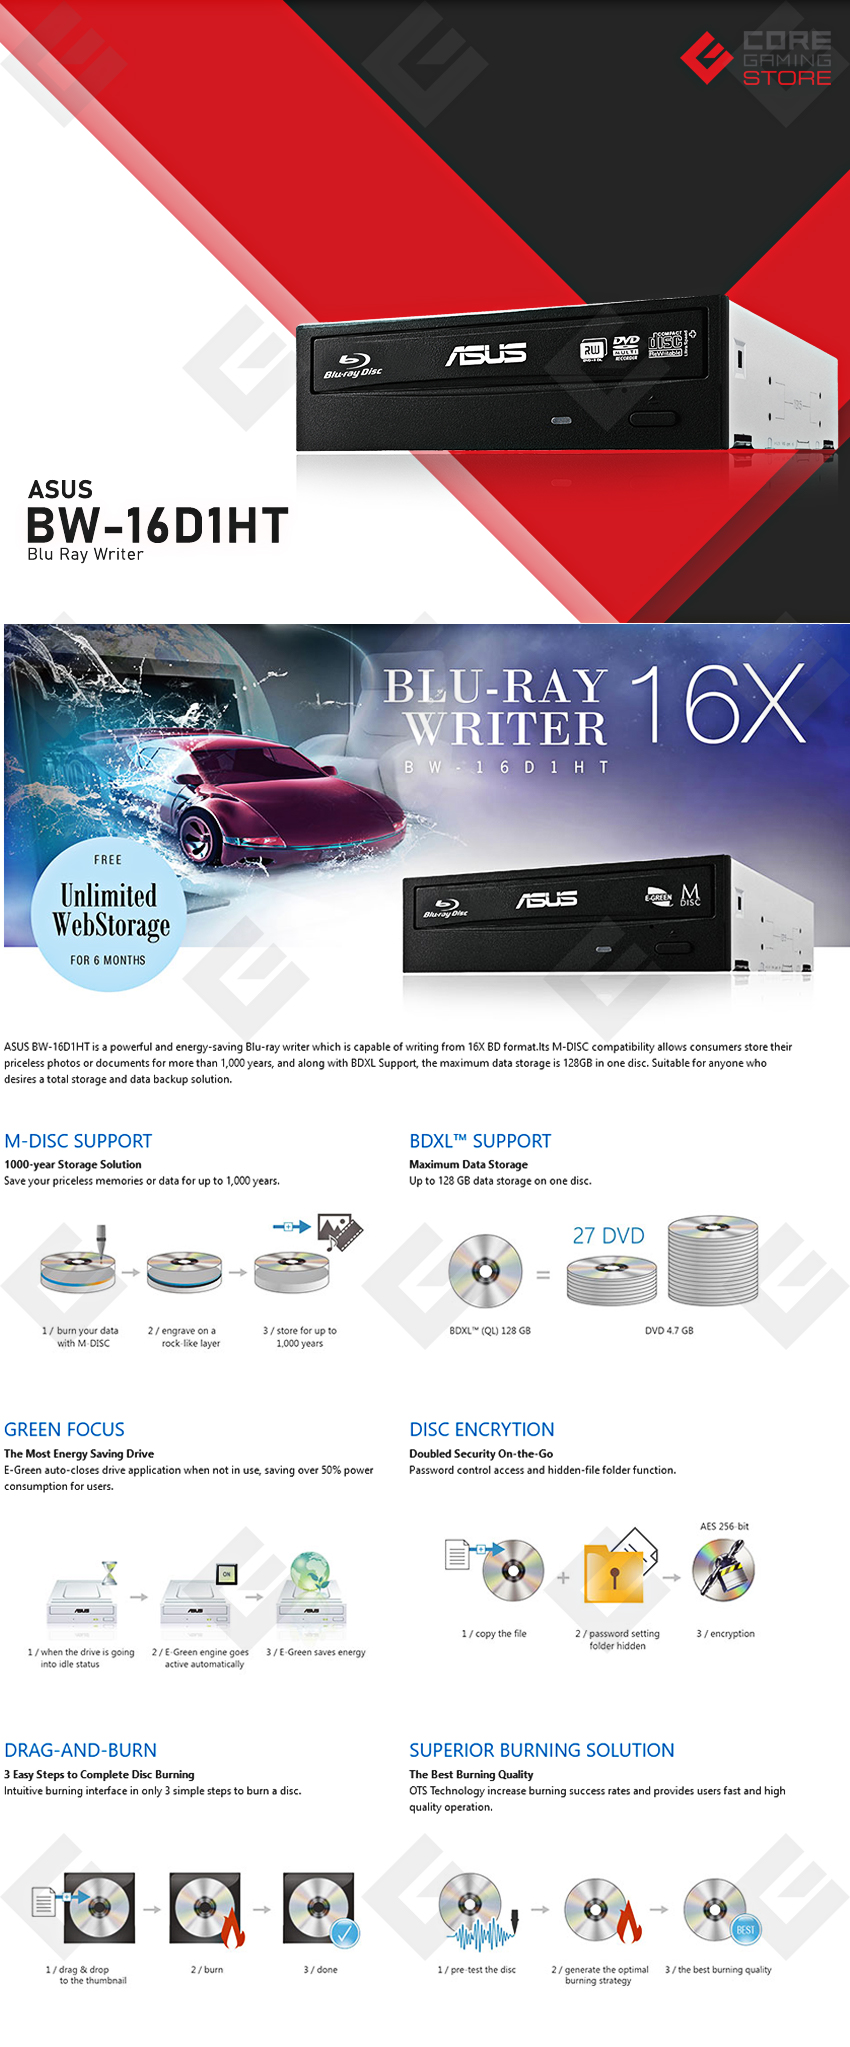 Blu-Ray Writer Asus BW-16D1HT